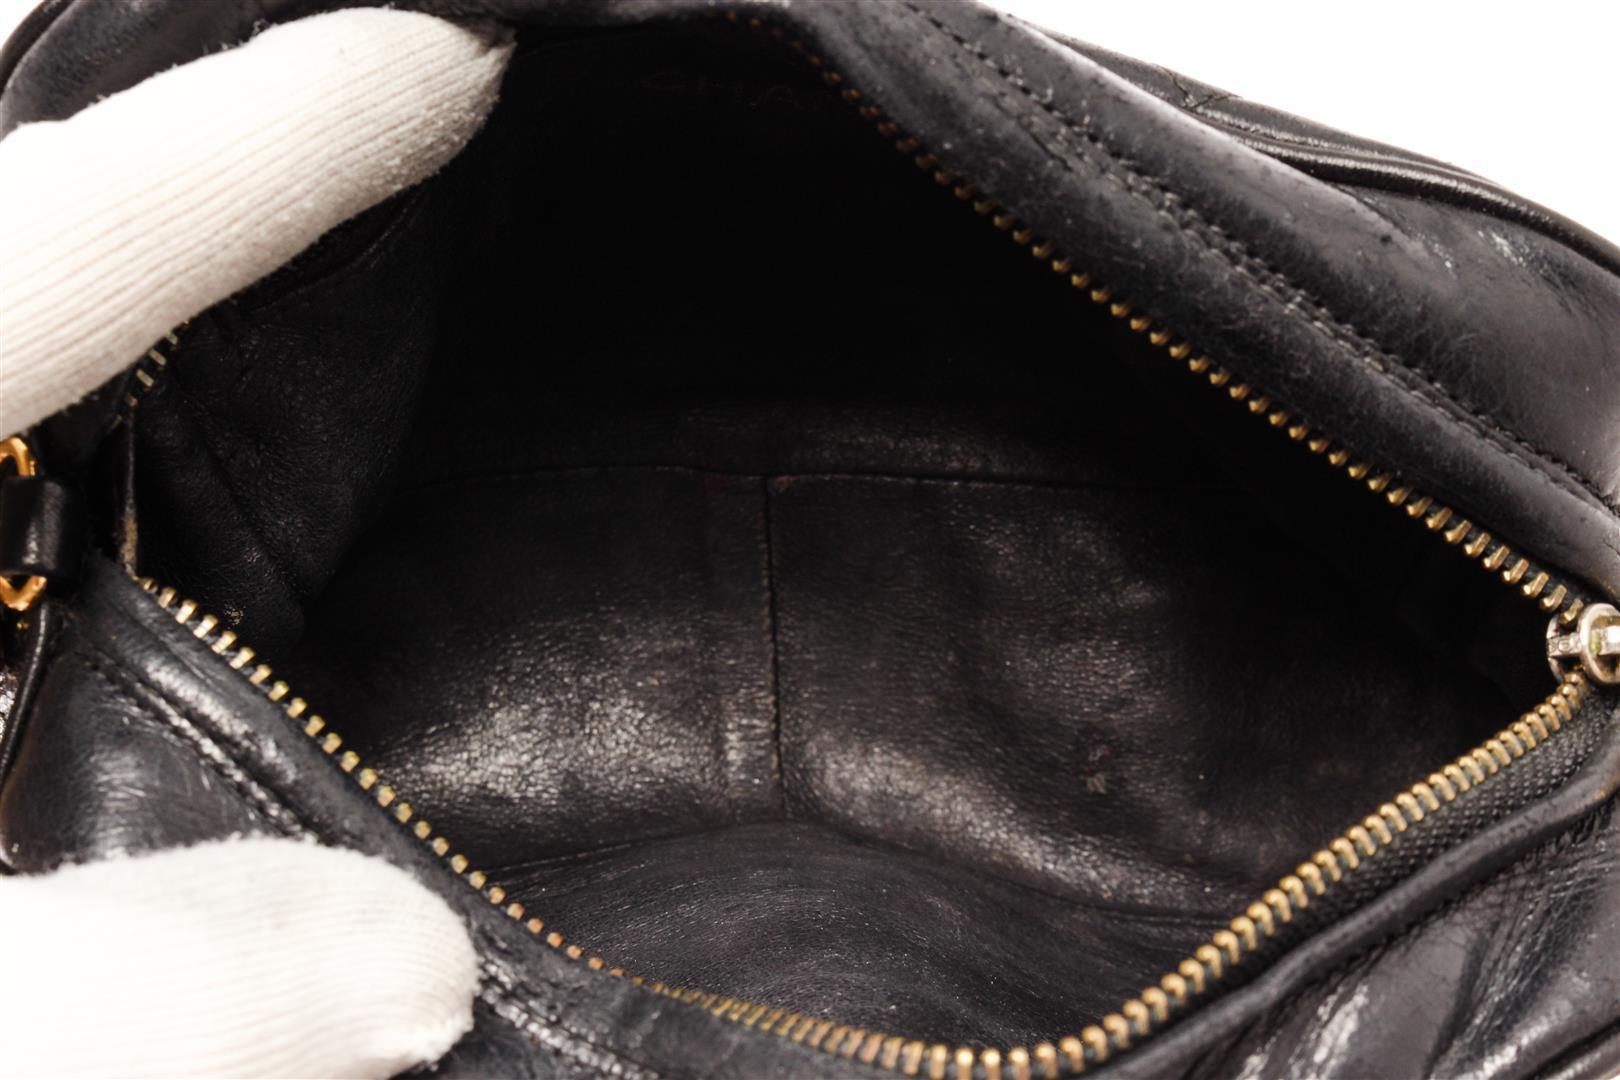 Chanel Black Lambskin Mini Tassel Camera Crossbody Bag